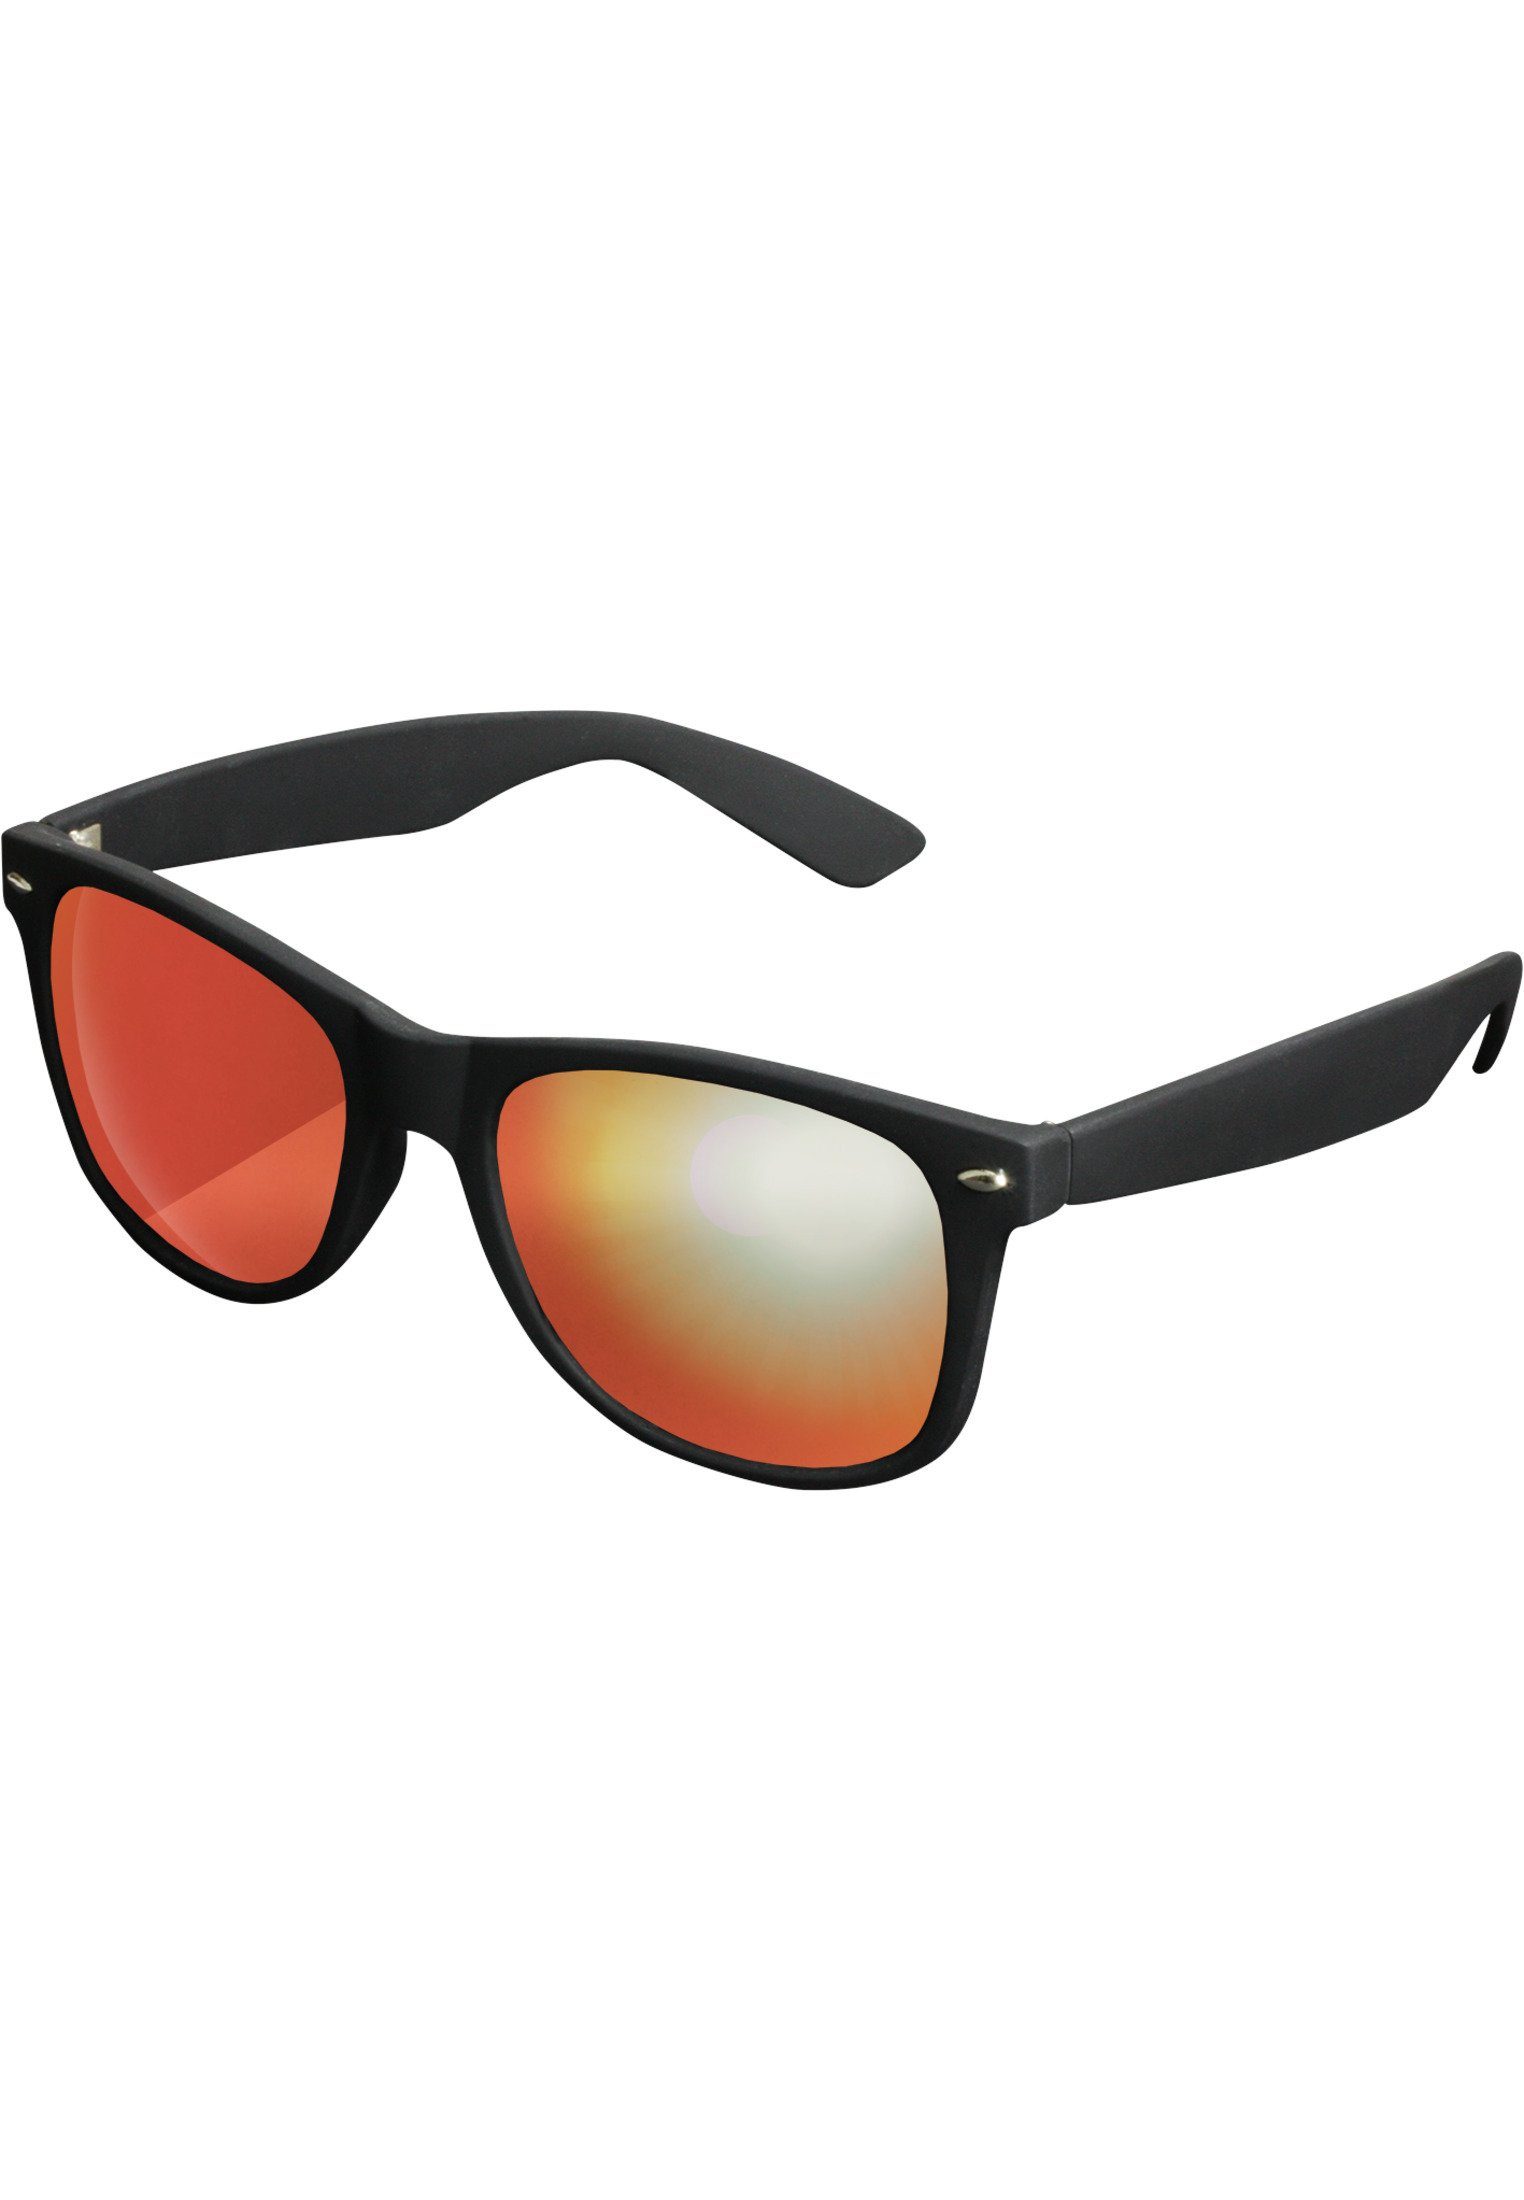 MSTRDS Mirror Likoma Sonnenbrille Accessoires Sunglasses blk/red